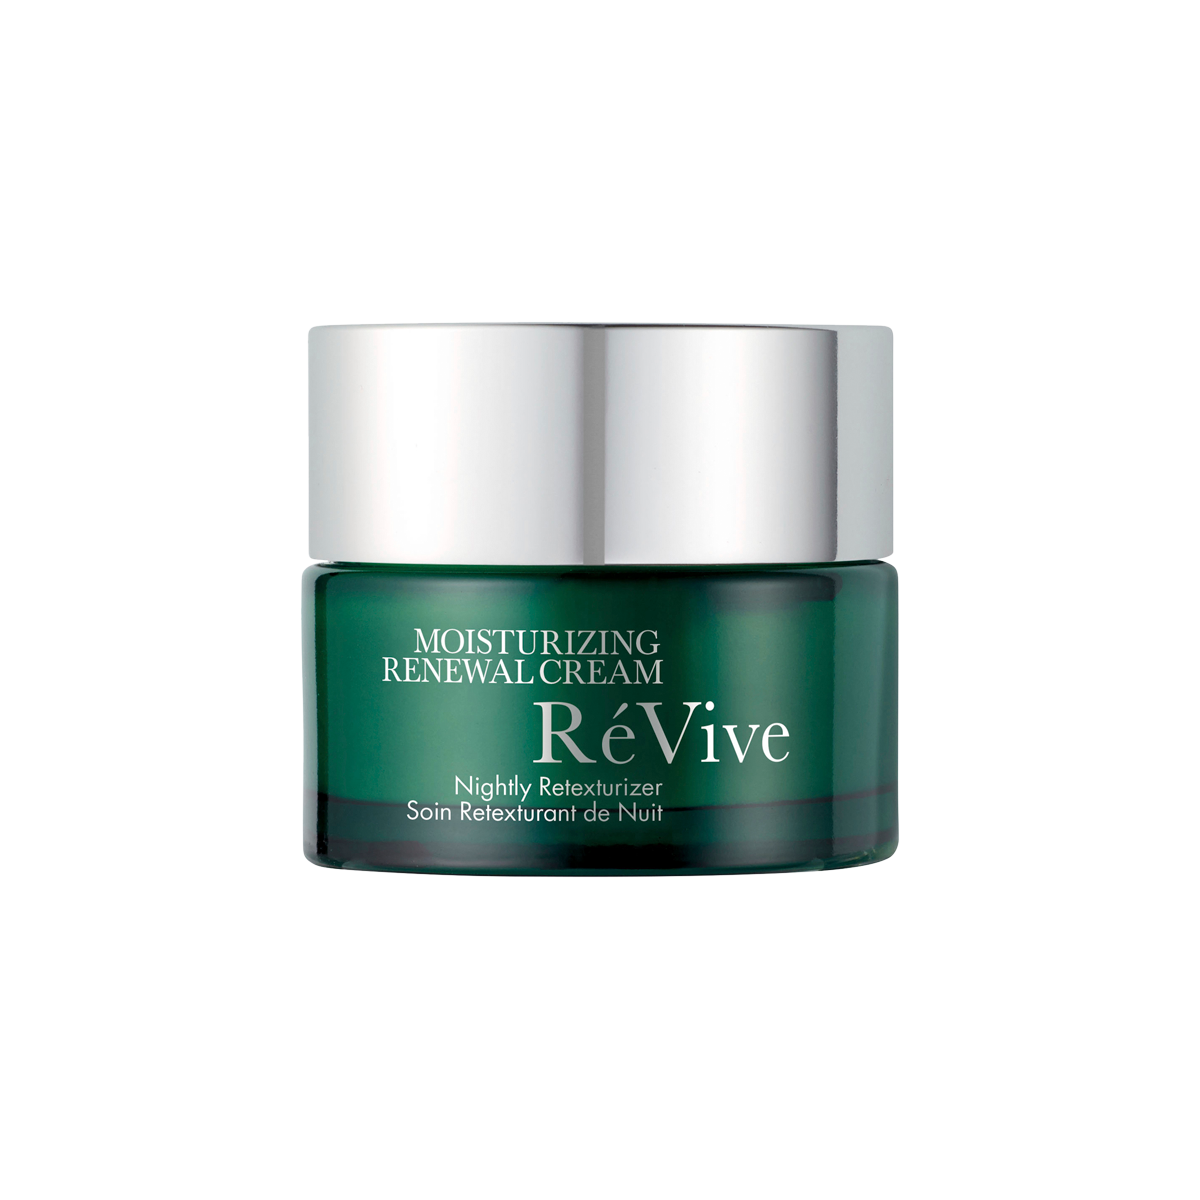 Revive - Moisturizing Renewal Cream